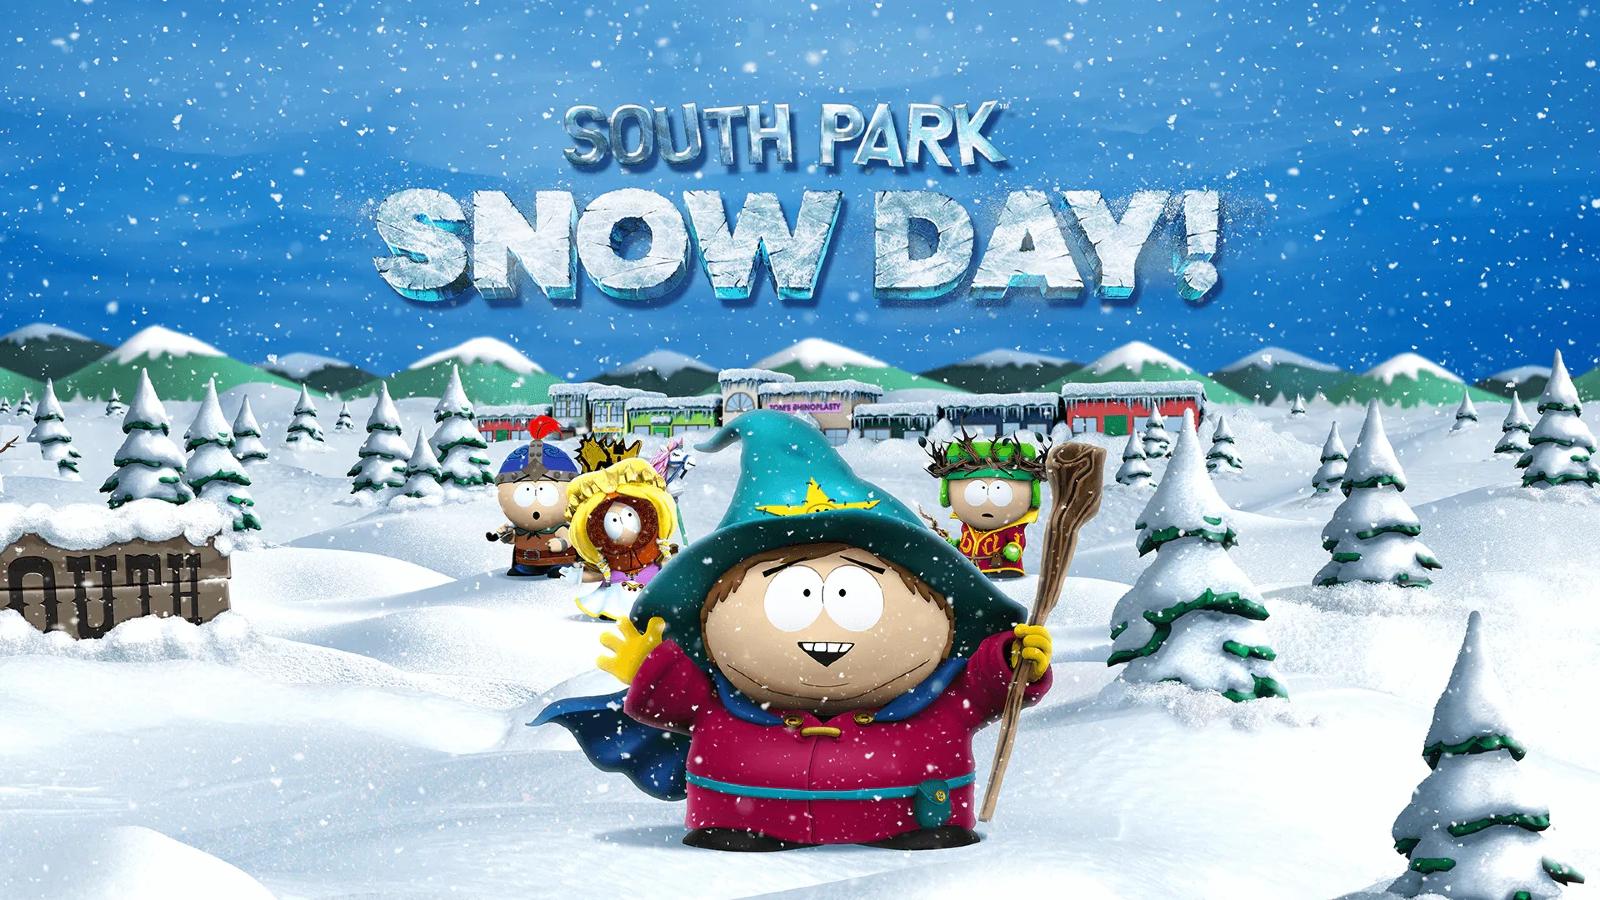 South Park Snow Day key art